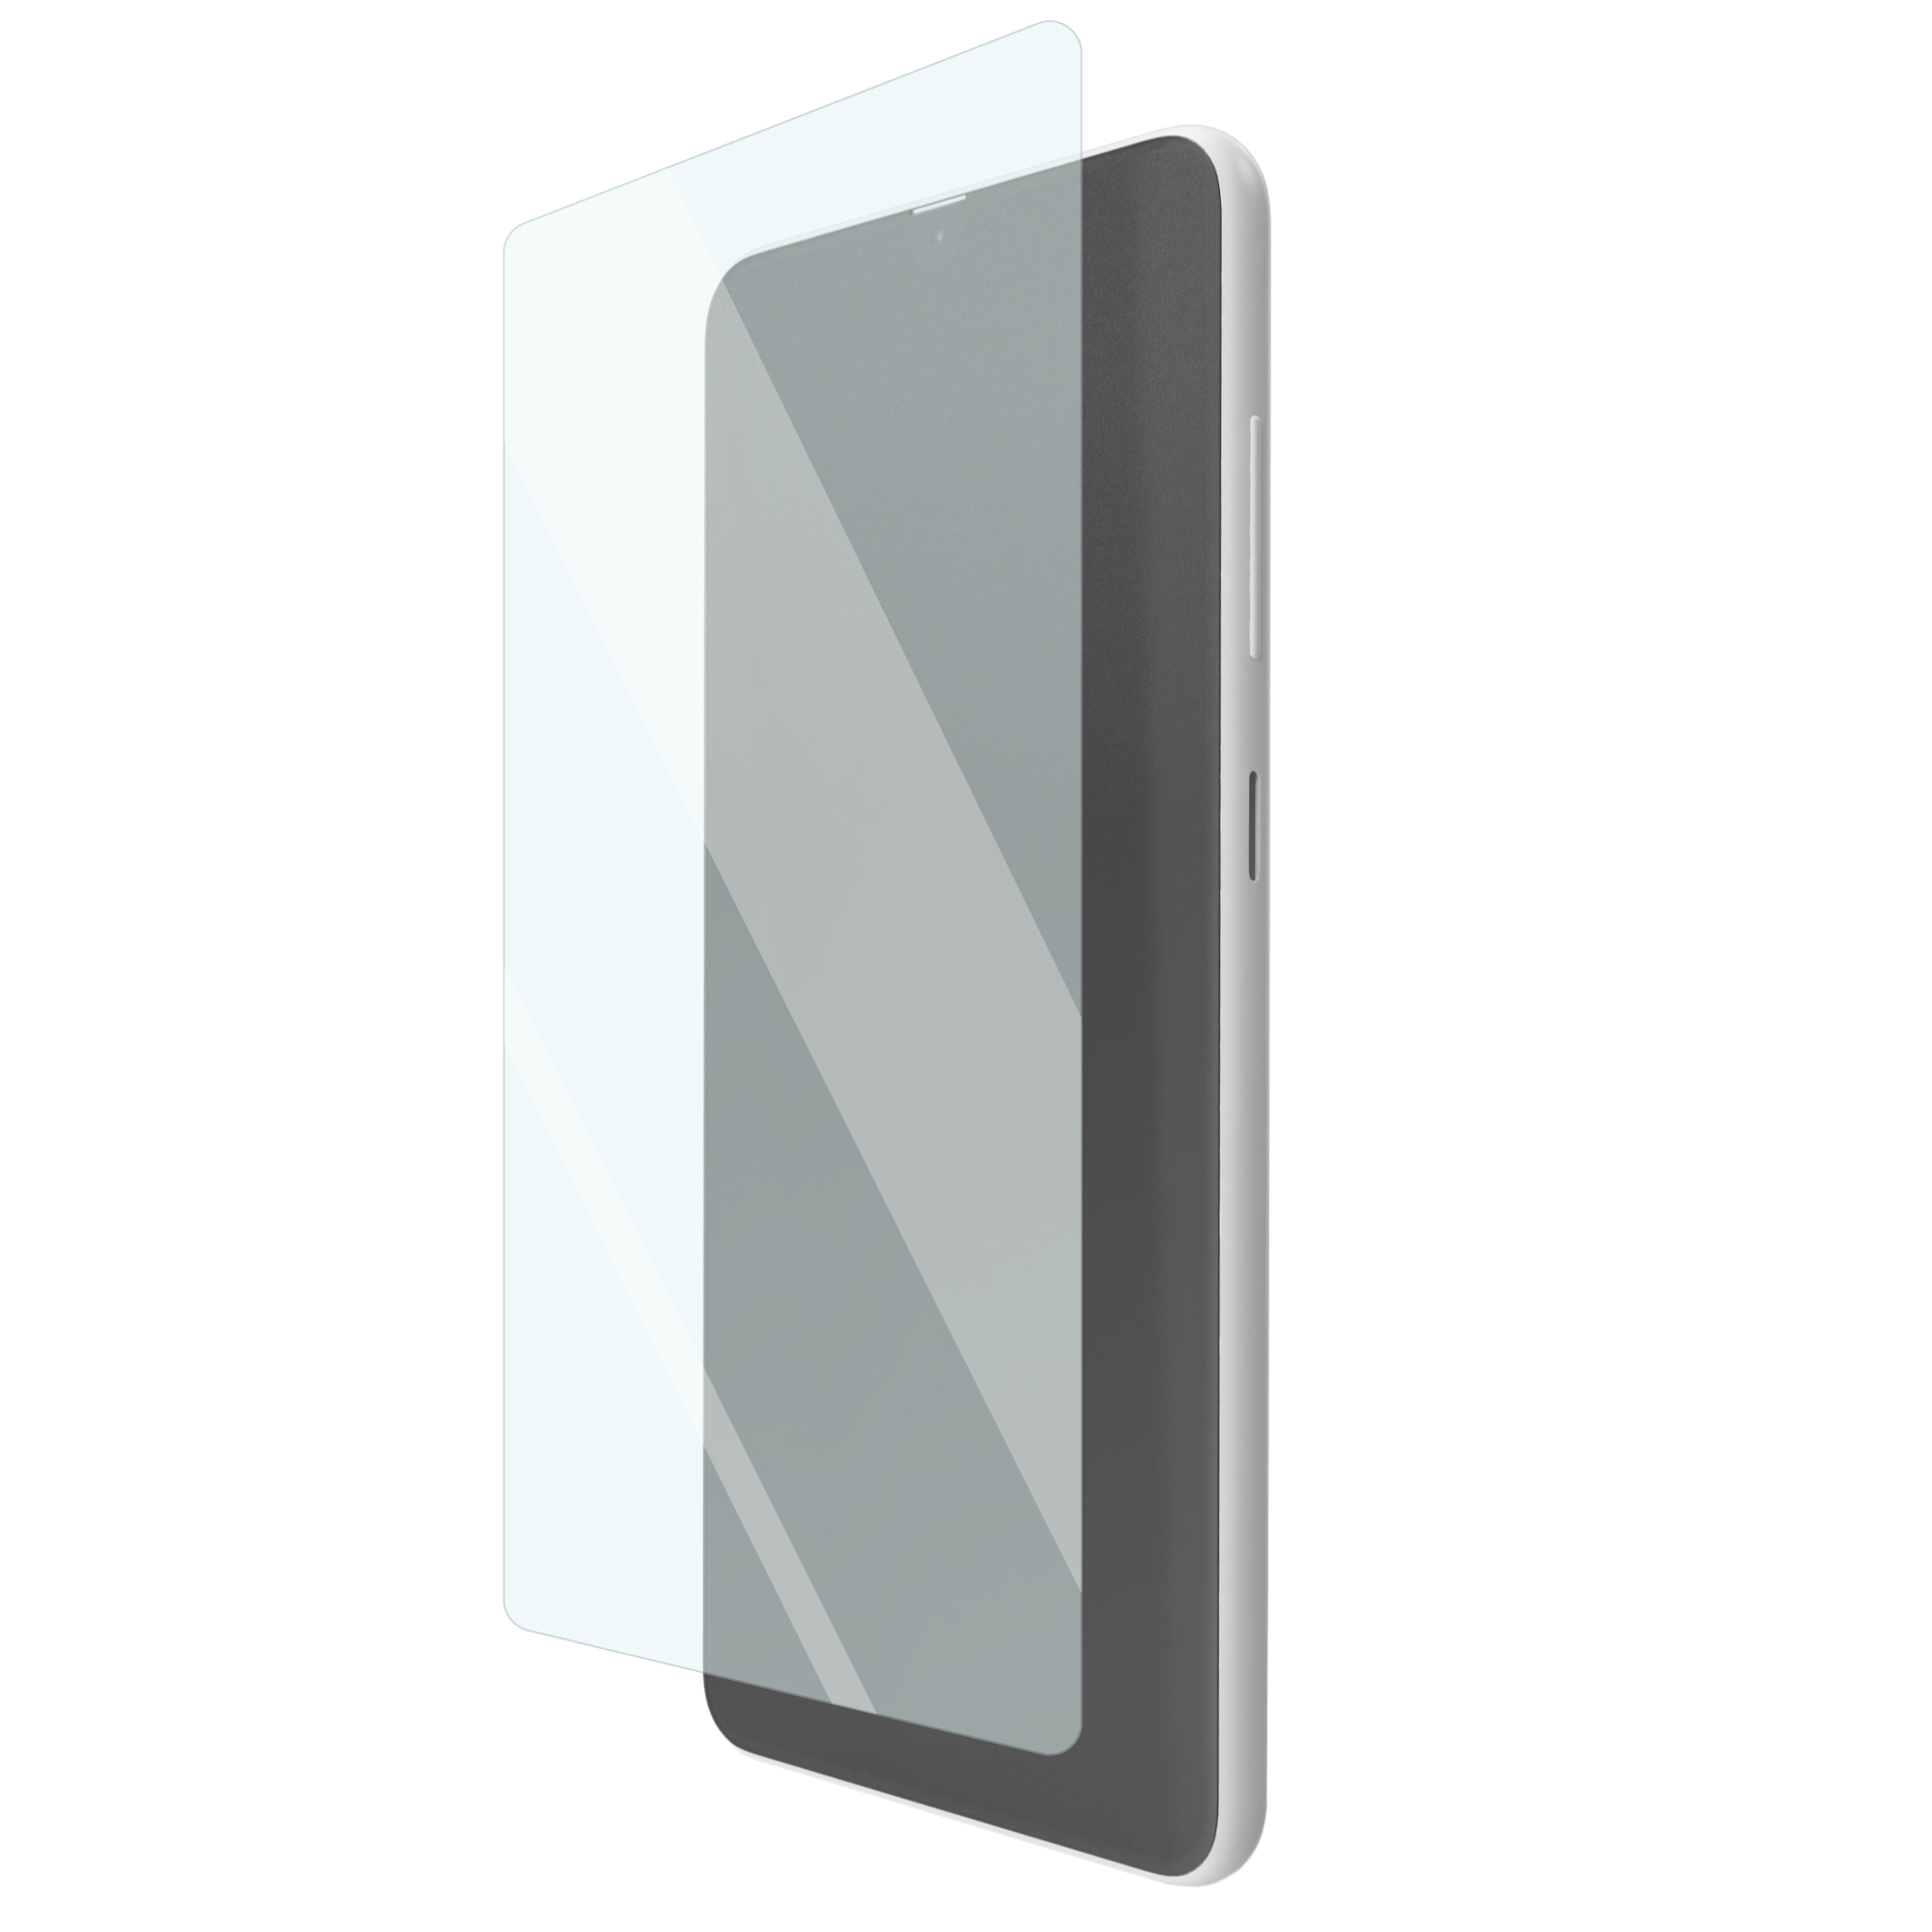 Folie de protectie silicon ShieldUP HiTech Regenerable pentru OnePlus 7 Pro thumb